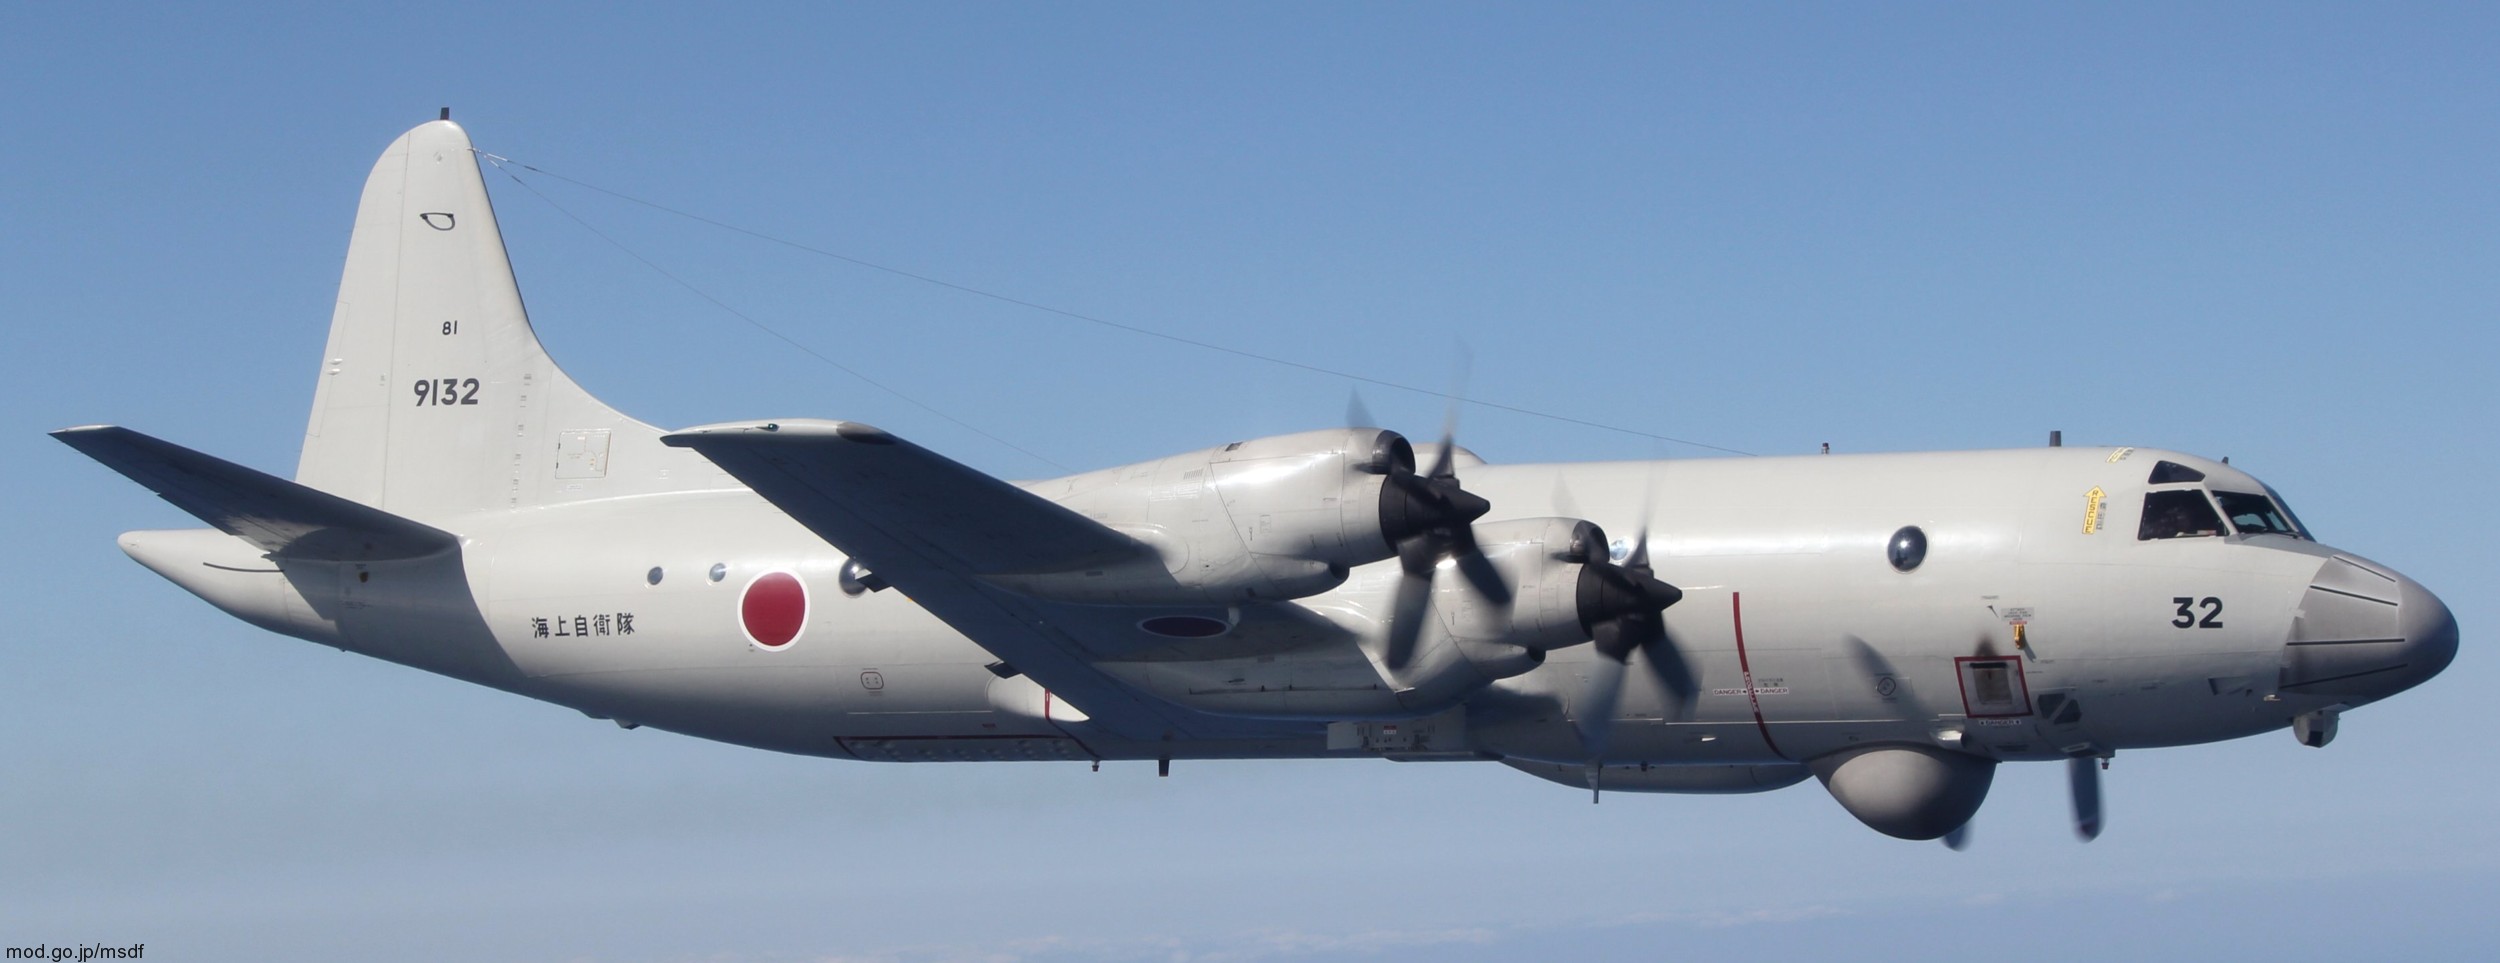 kawasaki op-3c orion reconnaissance aircraft mpa japan maritime self defense force jmsdf 9132 02